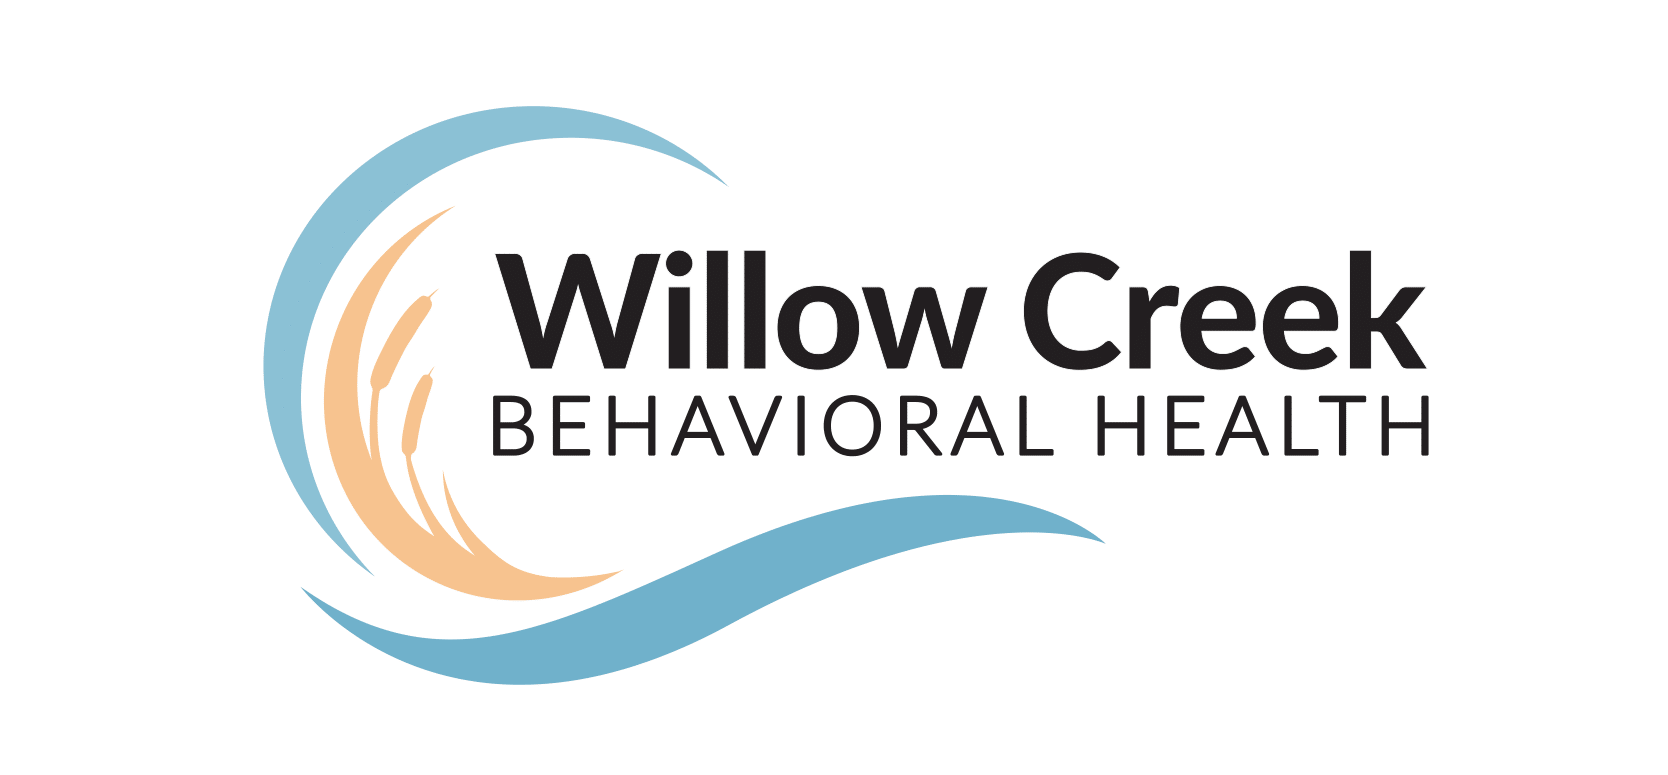 Willow Creek Behavioral Health